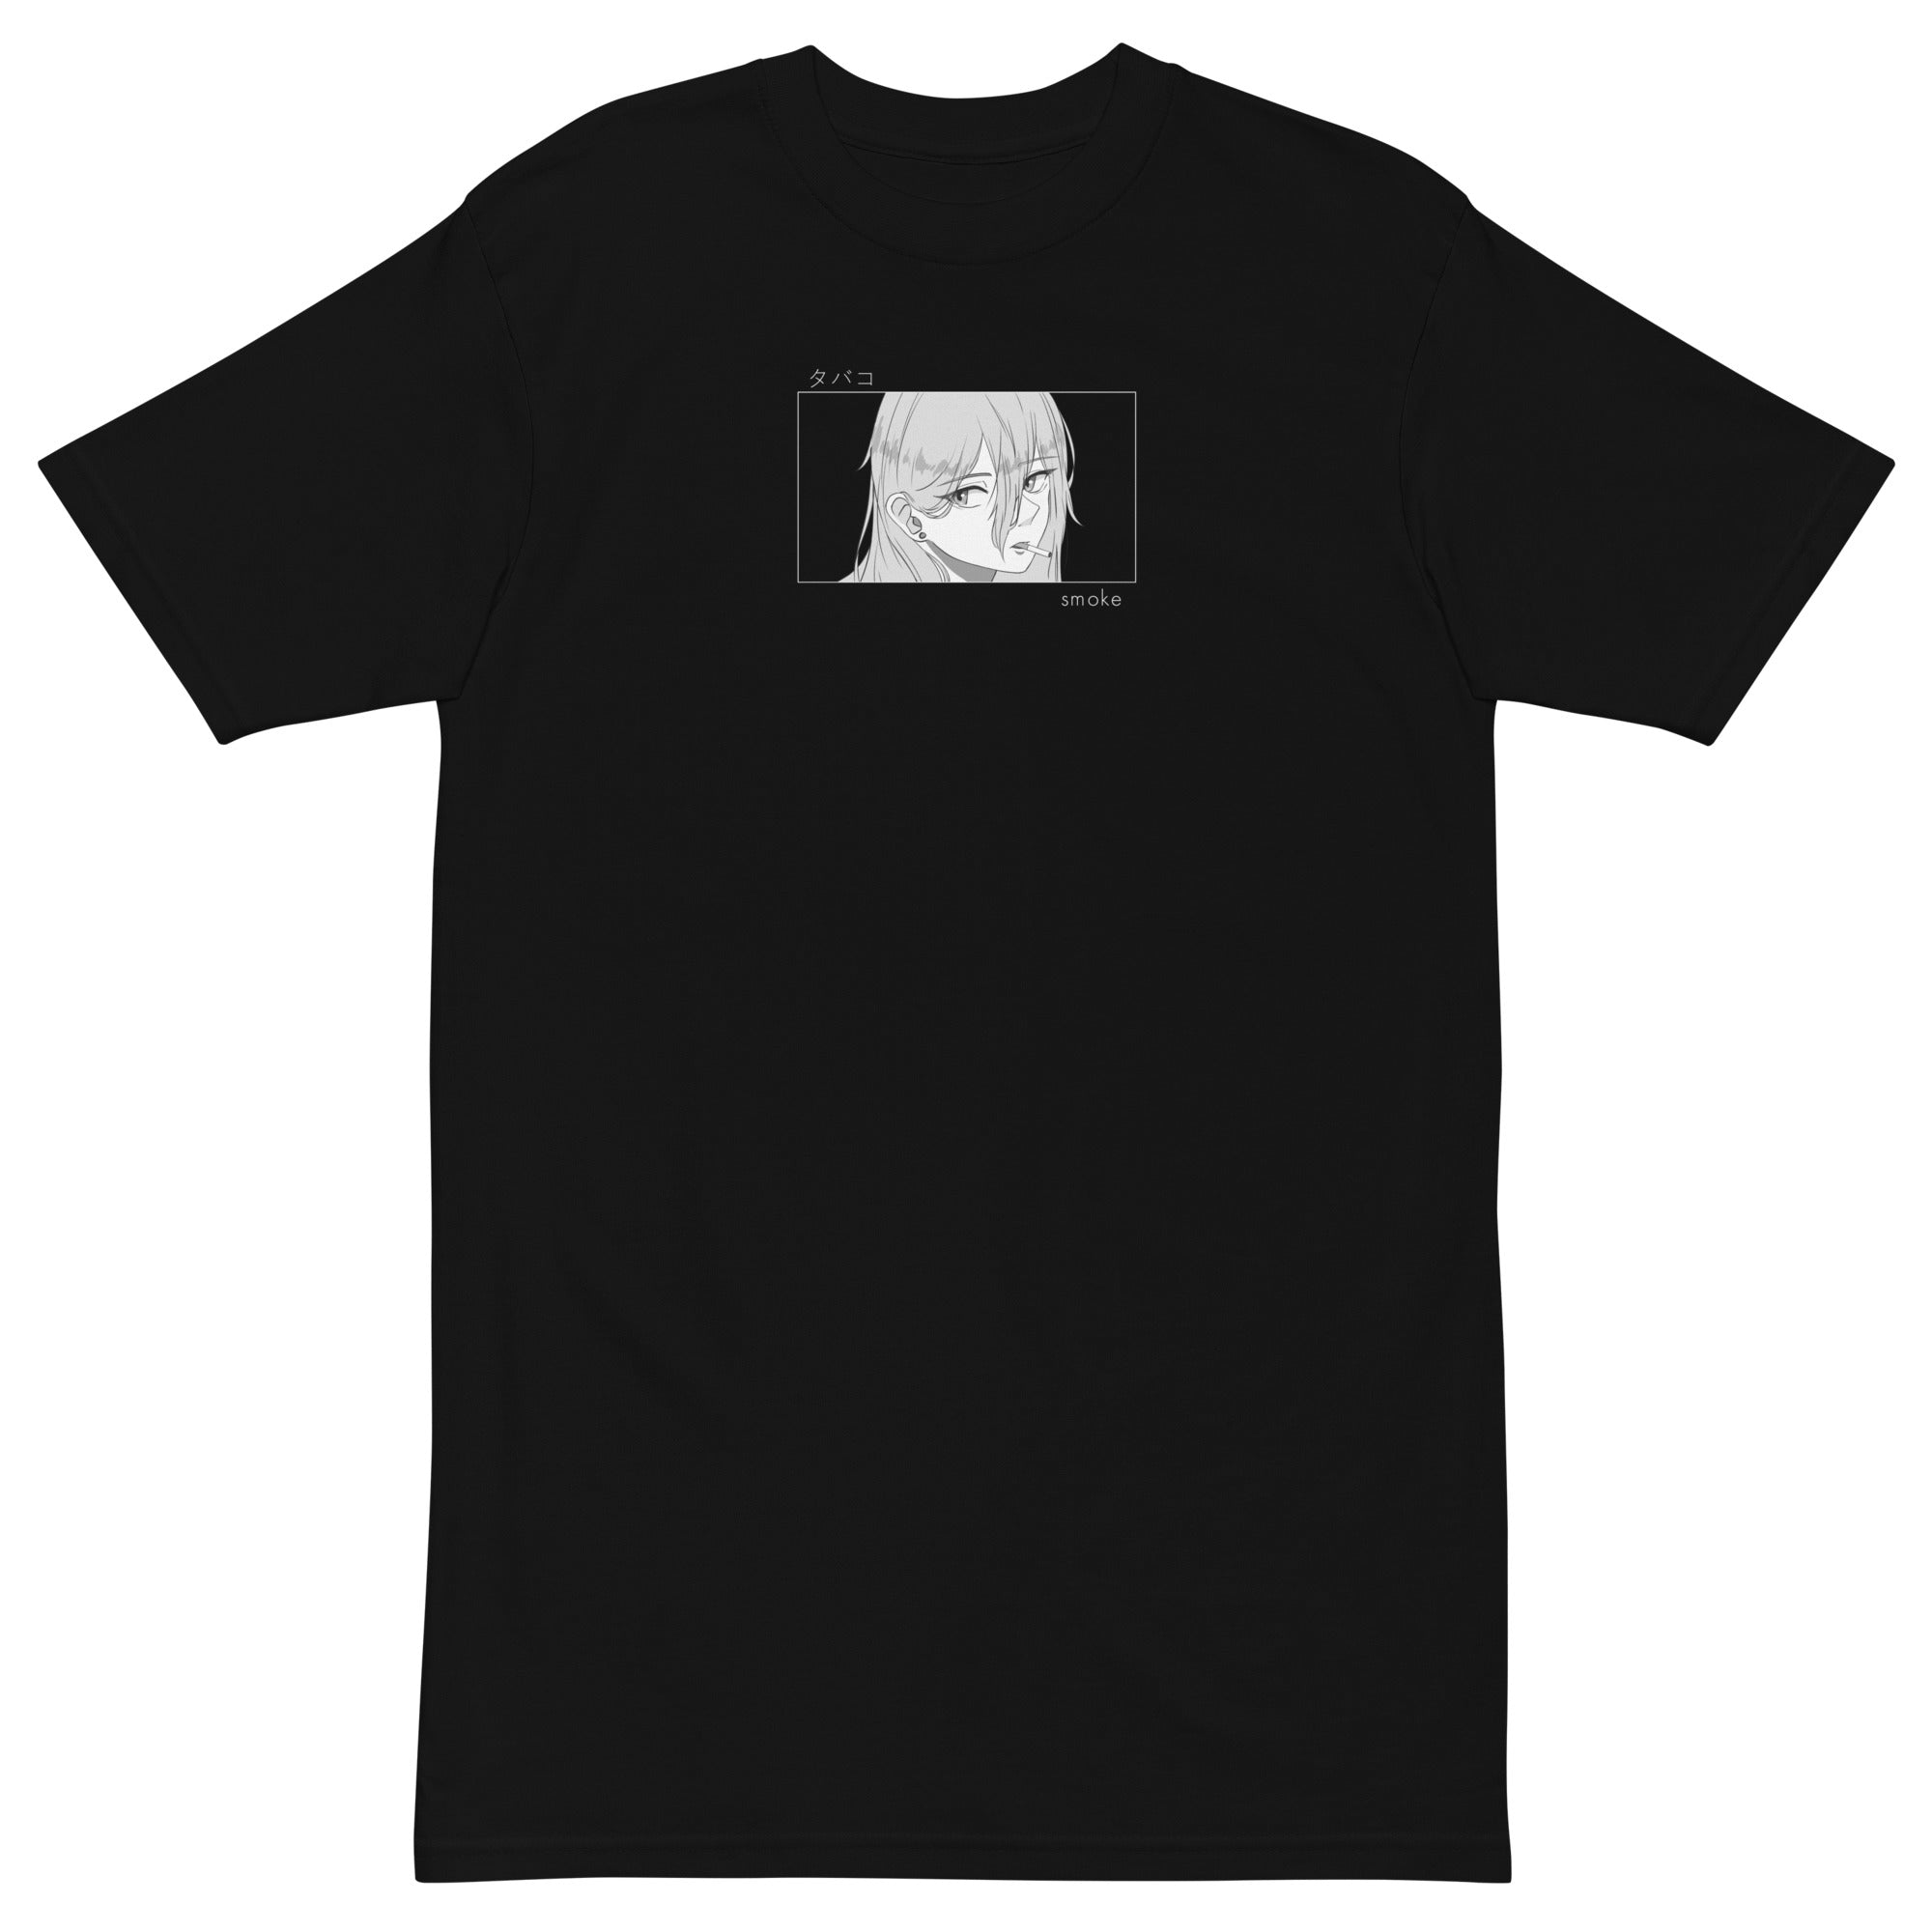 SMOKE • anime t-shirt - Jackler - anime-inspired streetwear - anime clothing